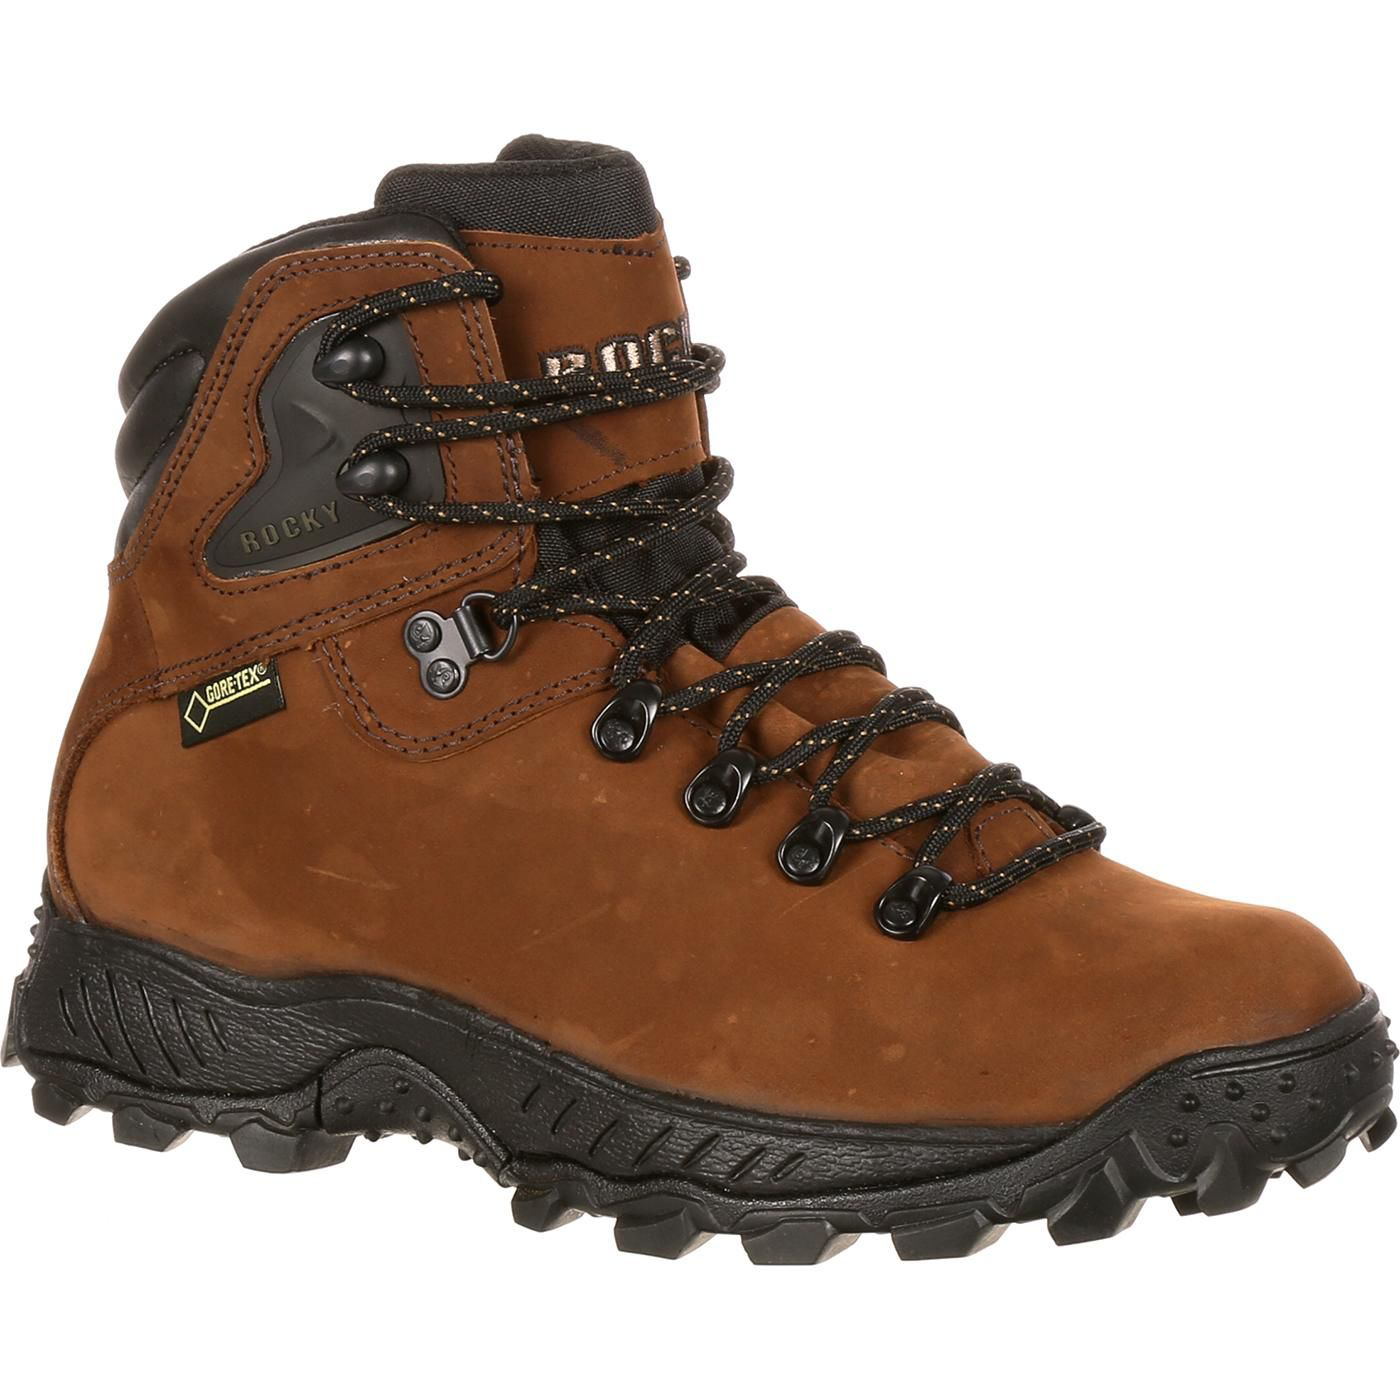 Rocky Ridgetop GORE-TEX 6"" Hiking Boots for Men - Brown - 9M